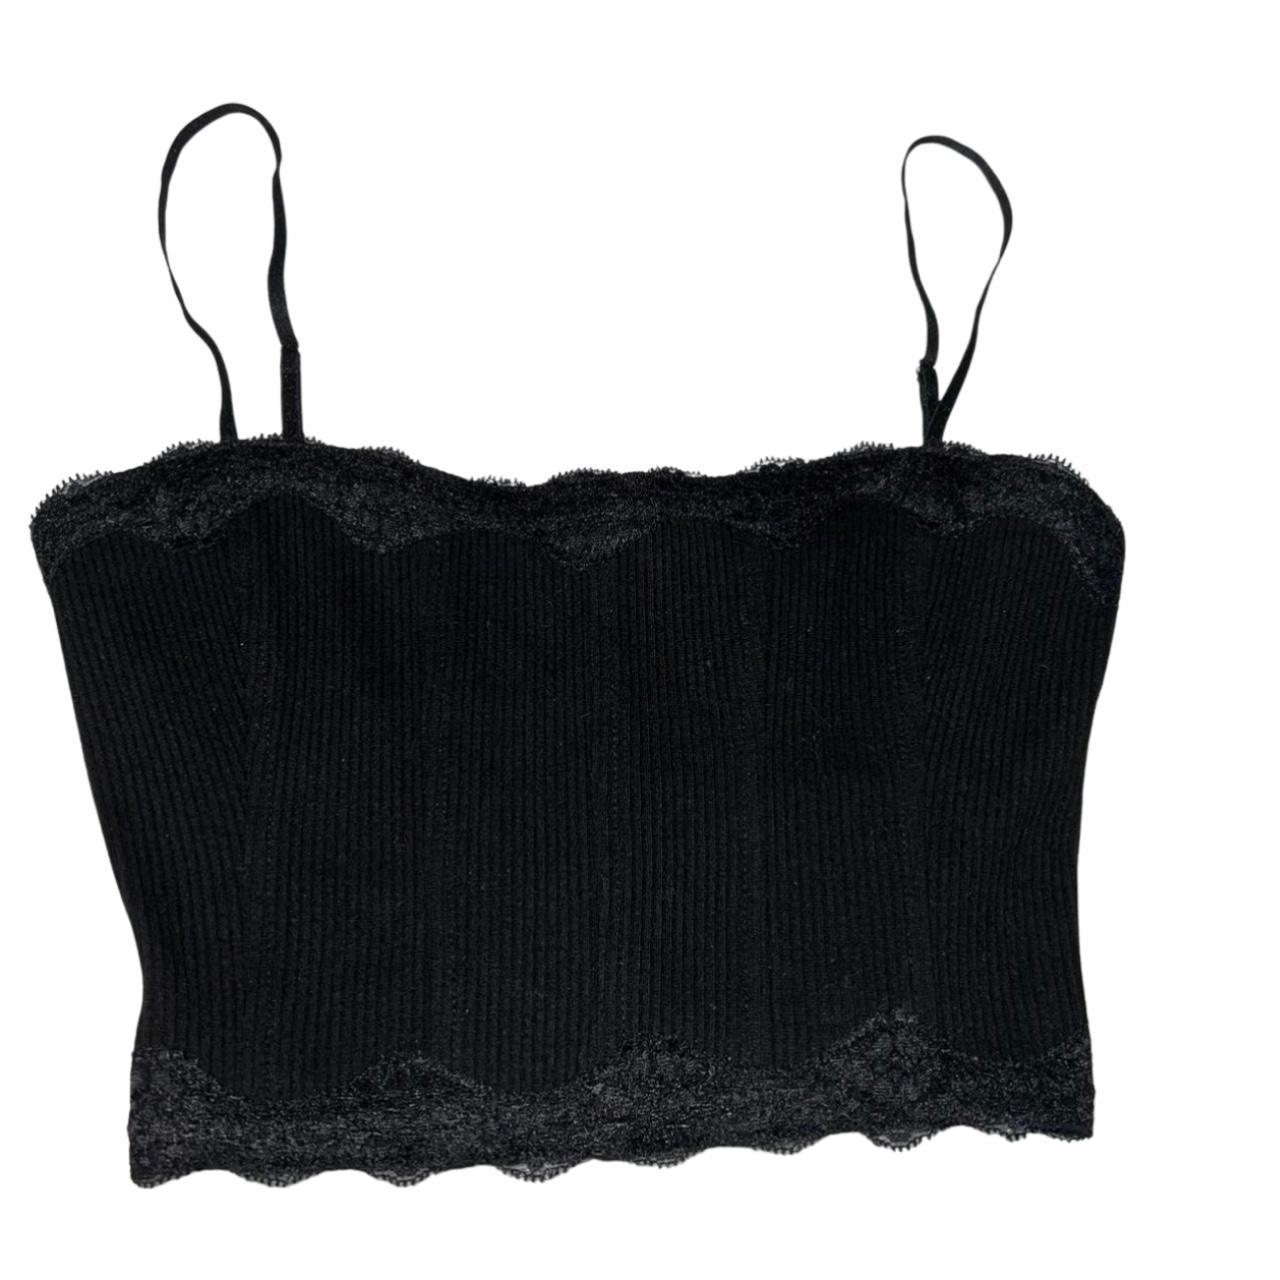 Product Image 1 - Corset like I.AM.GIA black cami
Size:small
Price: